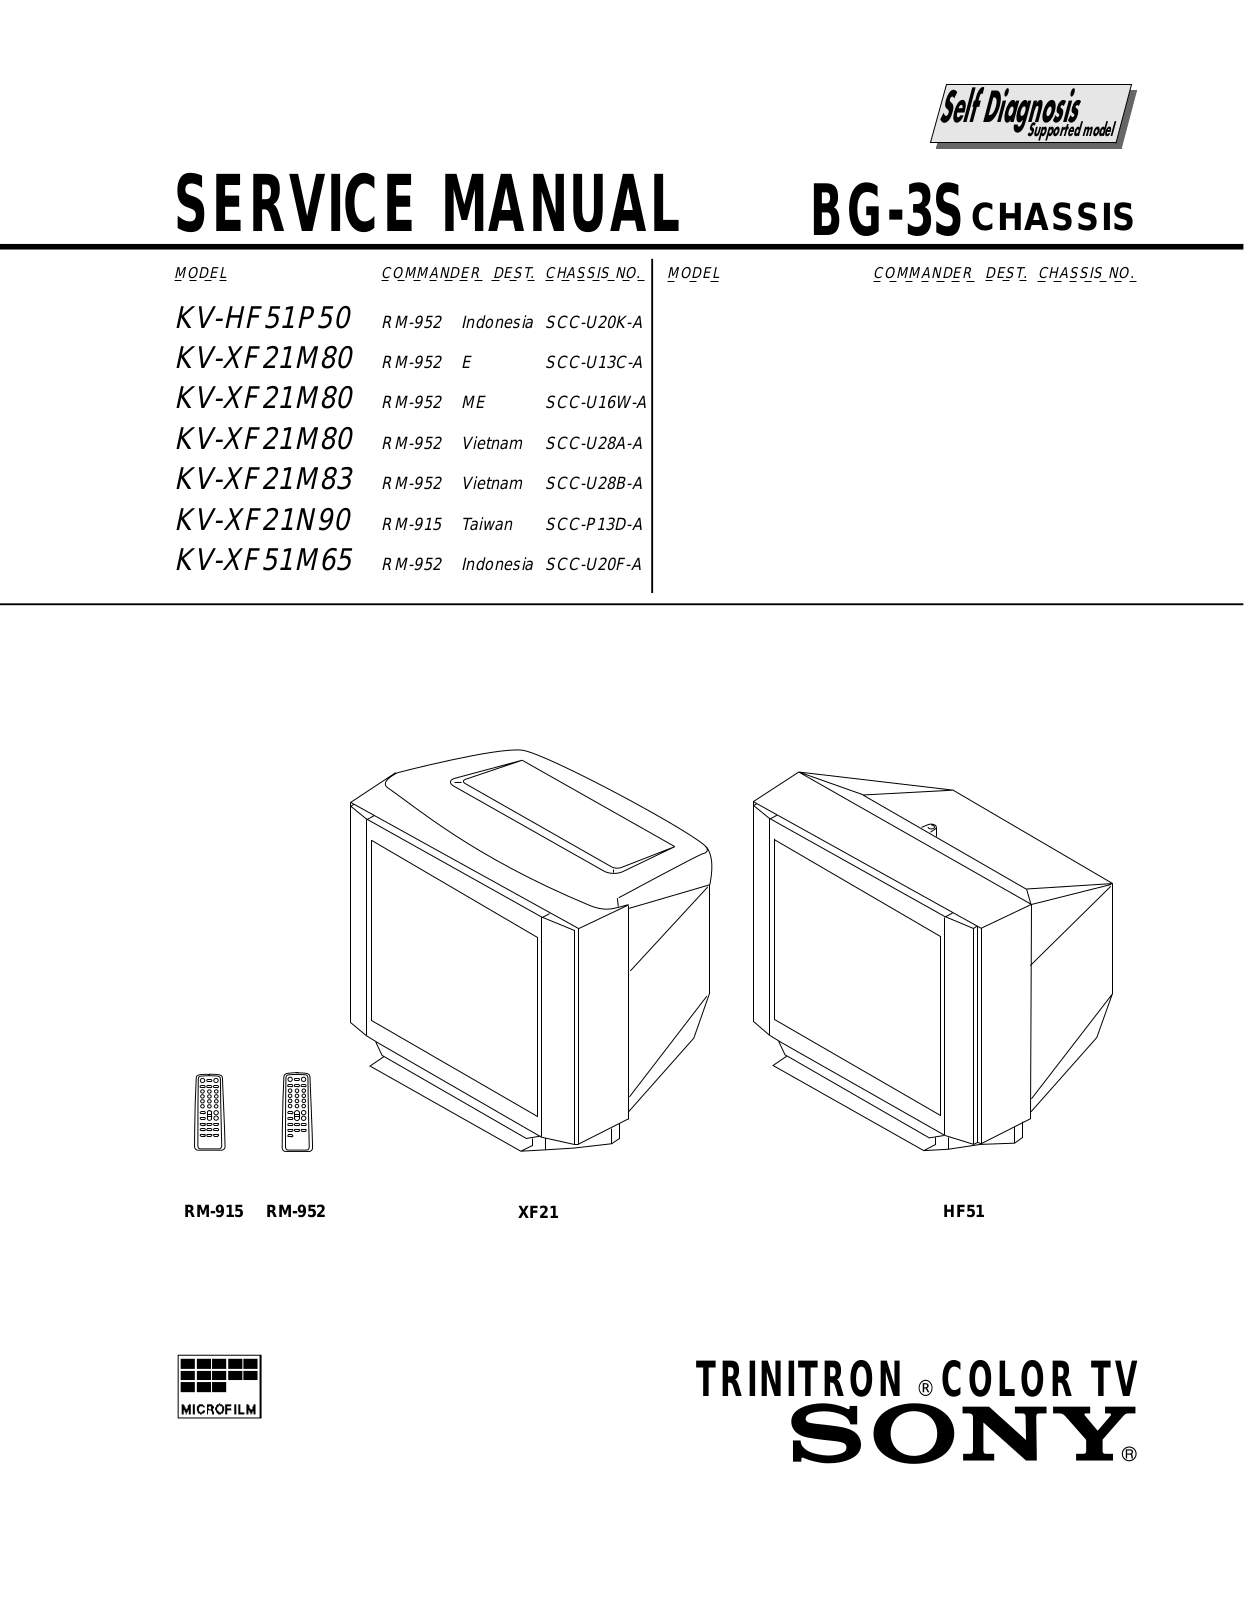 Sony TRINITRON KV-HF51P50, TRINITRON KV-XF21M83, TRINITRON KV-XF21N90, TRINITRON KV-XF51M65 User Manual